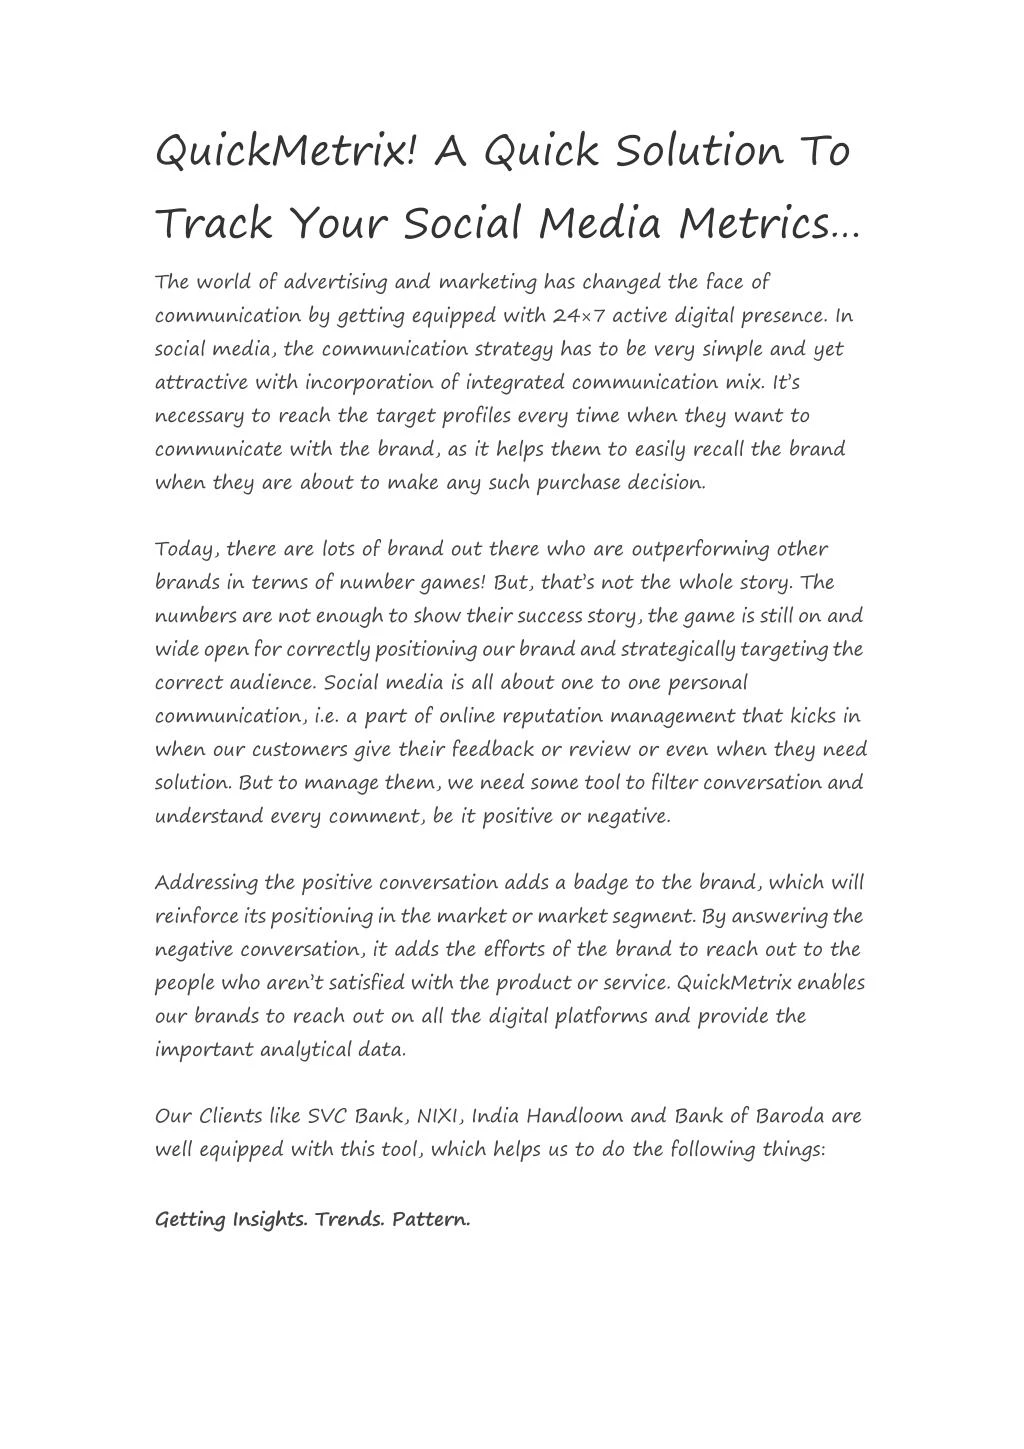 quickmetrix a quick solution to track your social